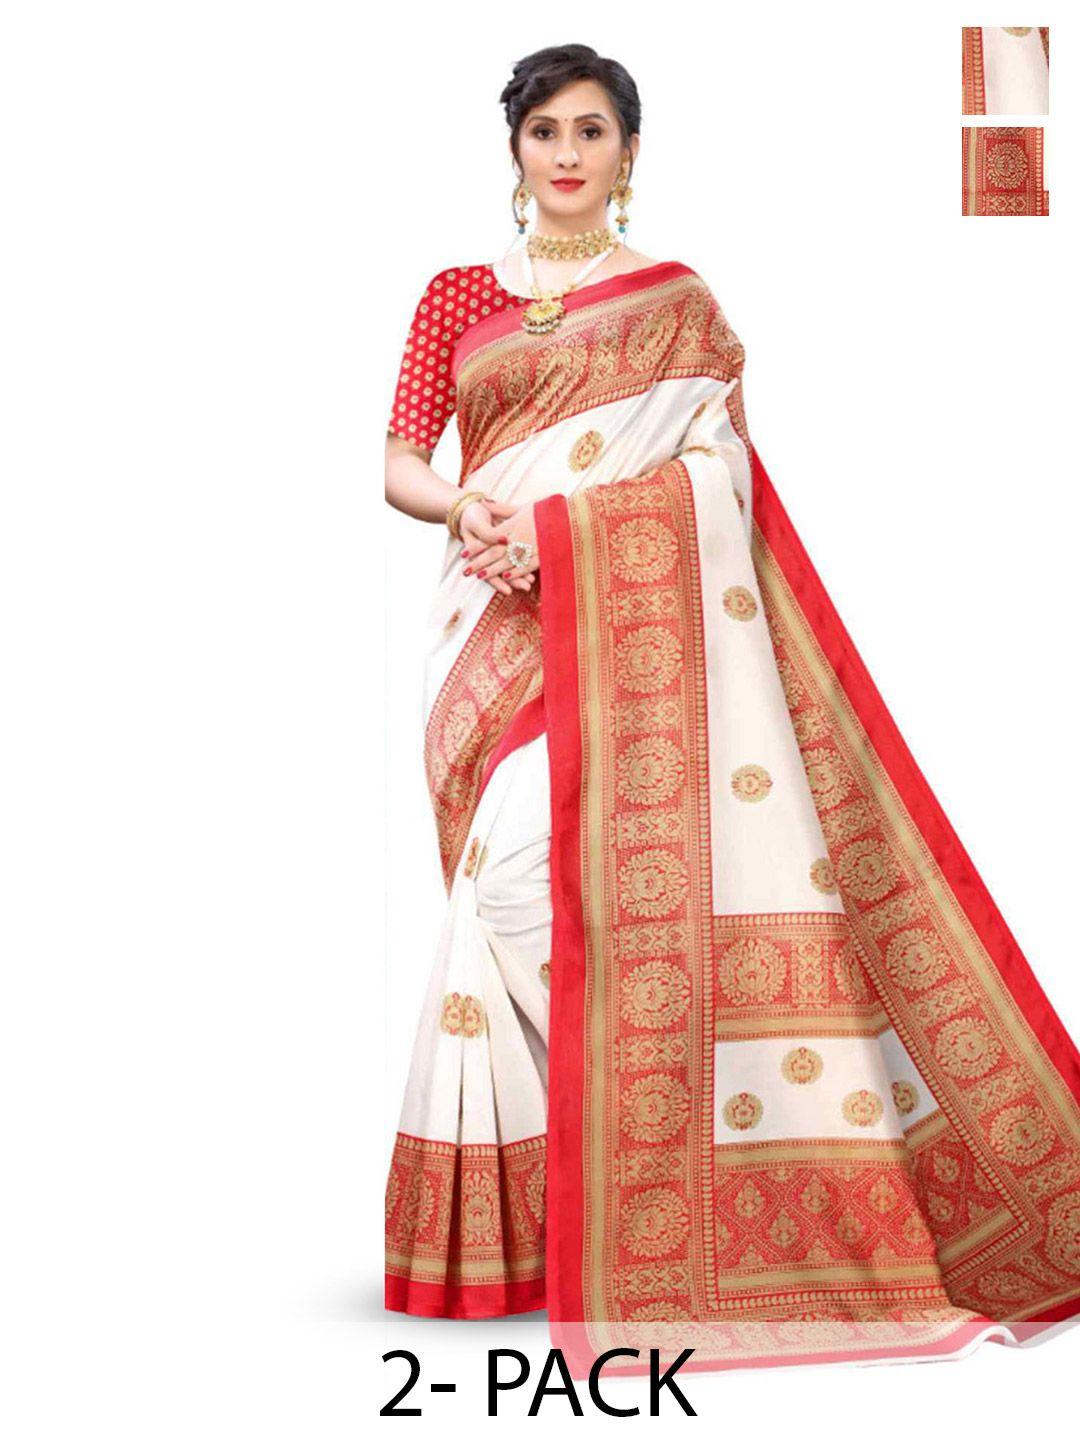 kalini selection of 2 ethnic motifs printed mysore cotton silk sarees